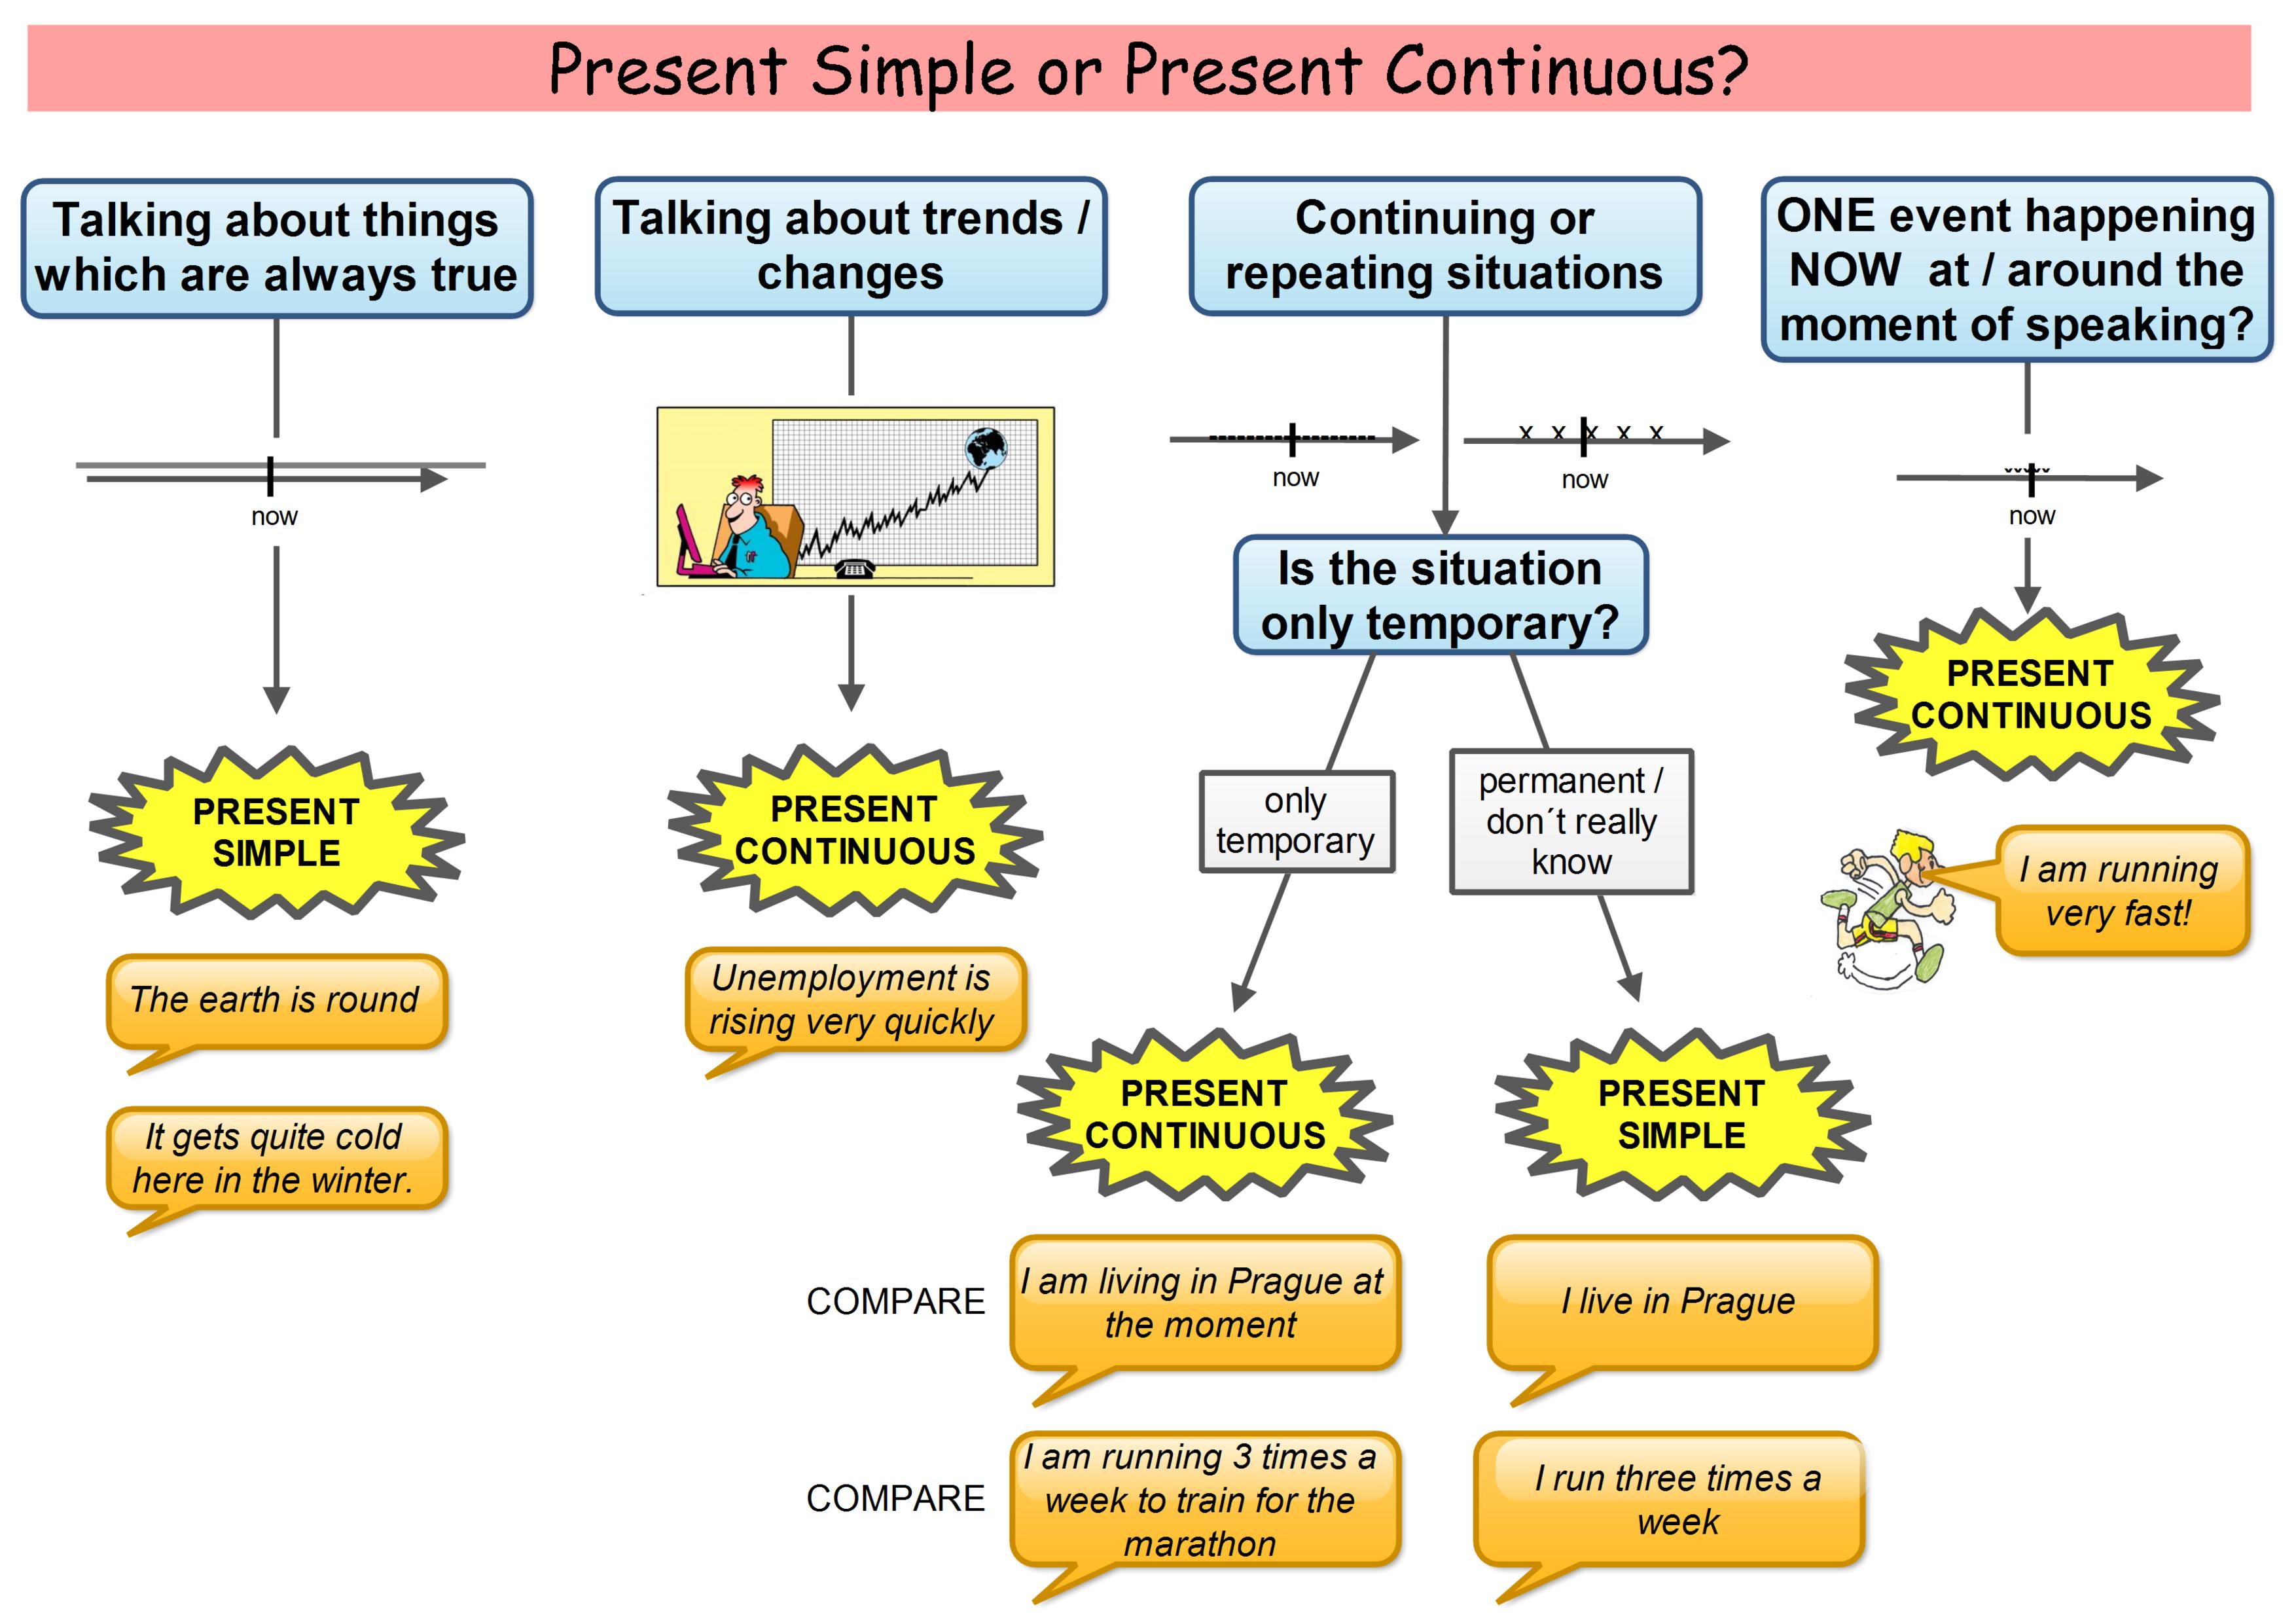 Present simple vs present continuous ответы. Present simple vs present Continuous таблица. Present simple vs present Continuous. Сравнение present simple и present Continuous. Present simple present Continuous разница.